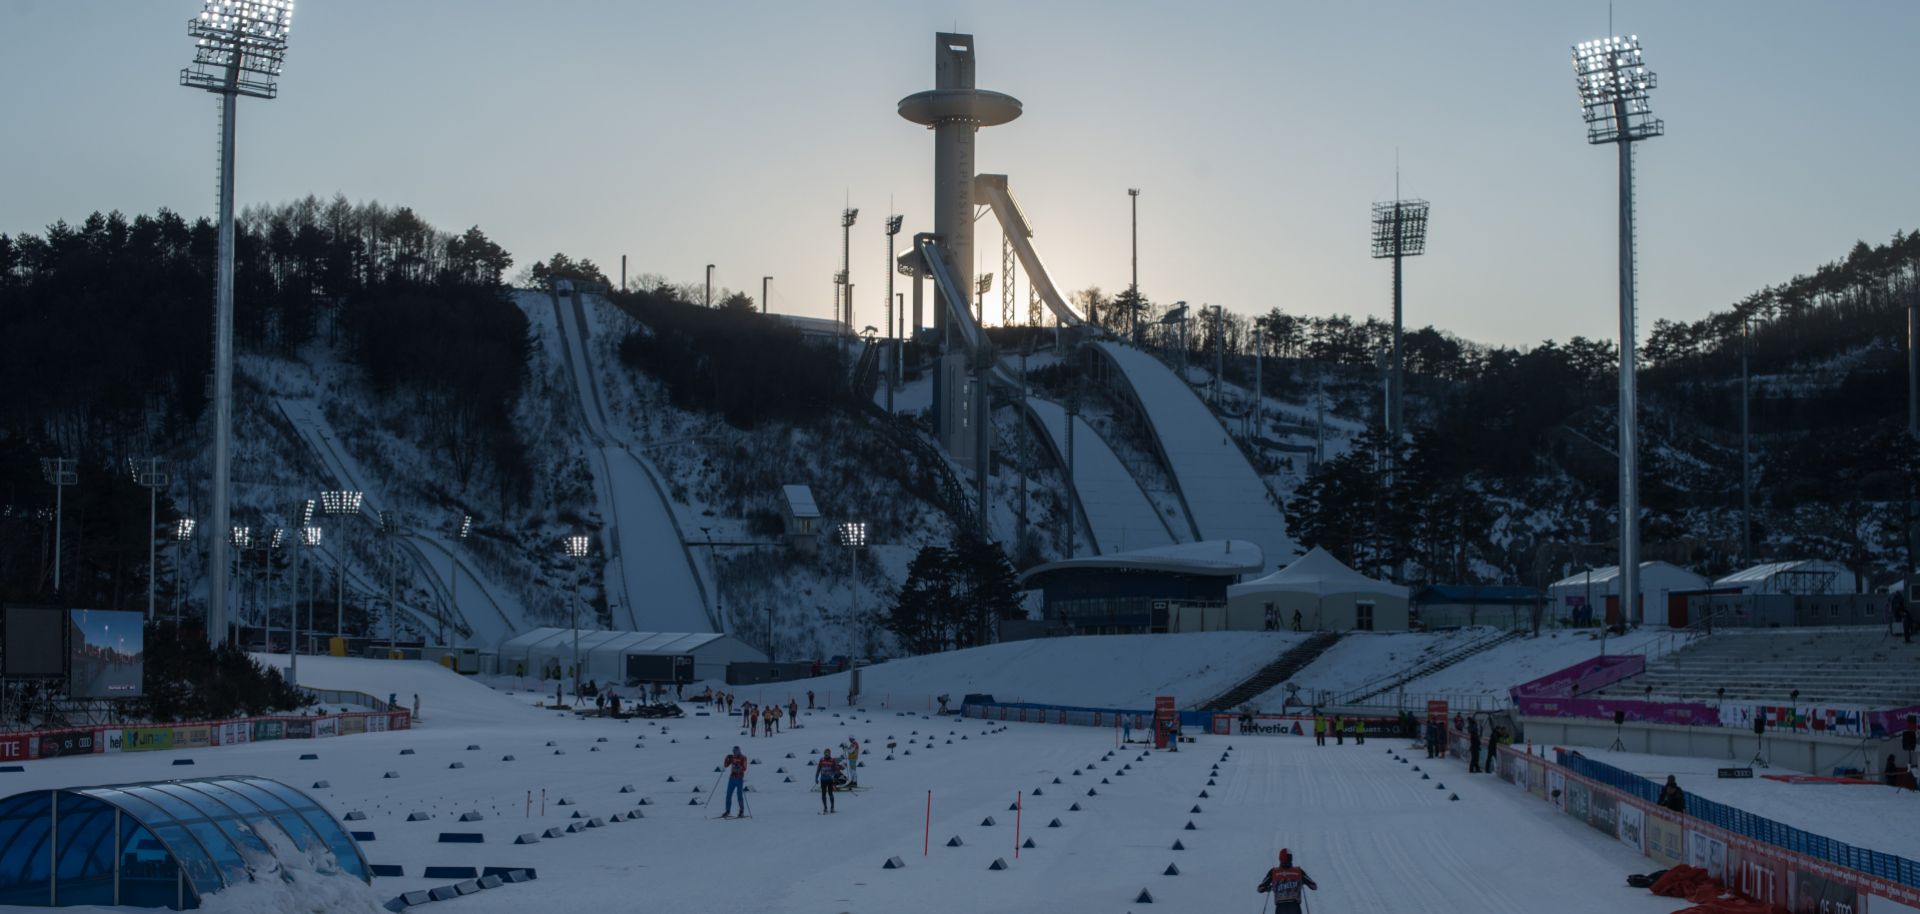 2018 Olympic venue in Pyeongchang, South Korea